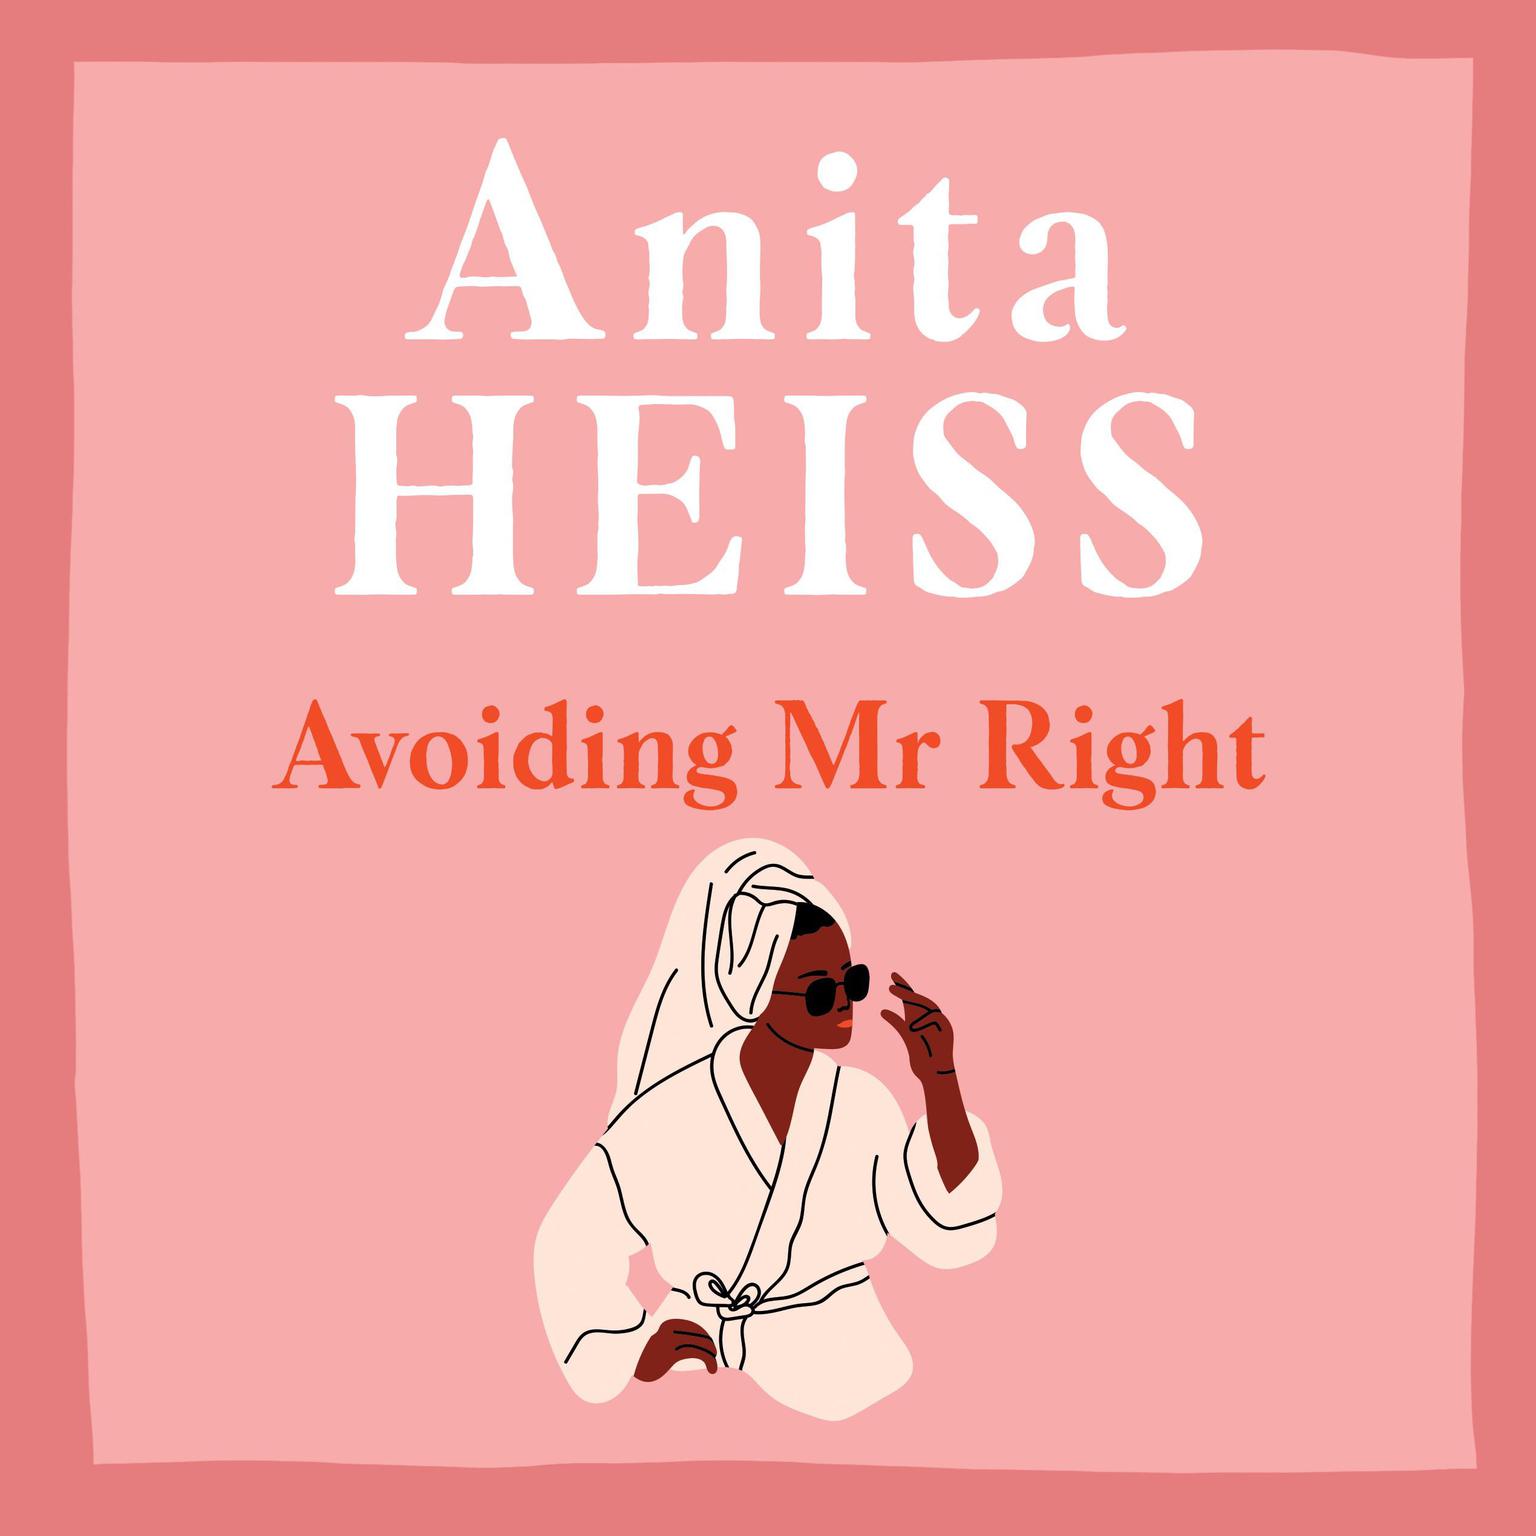 Avoiding Mr Right Audiobook, by Anita Heiss